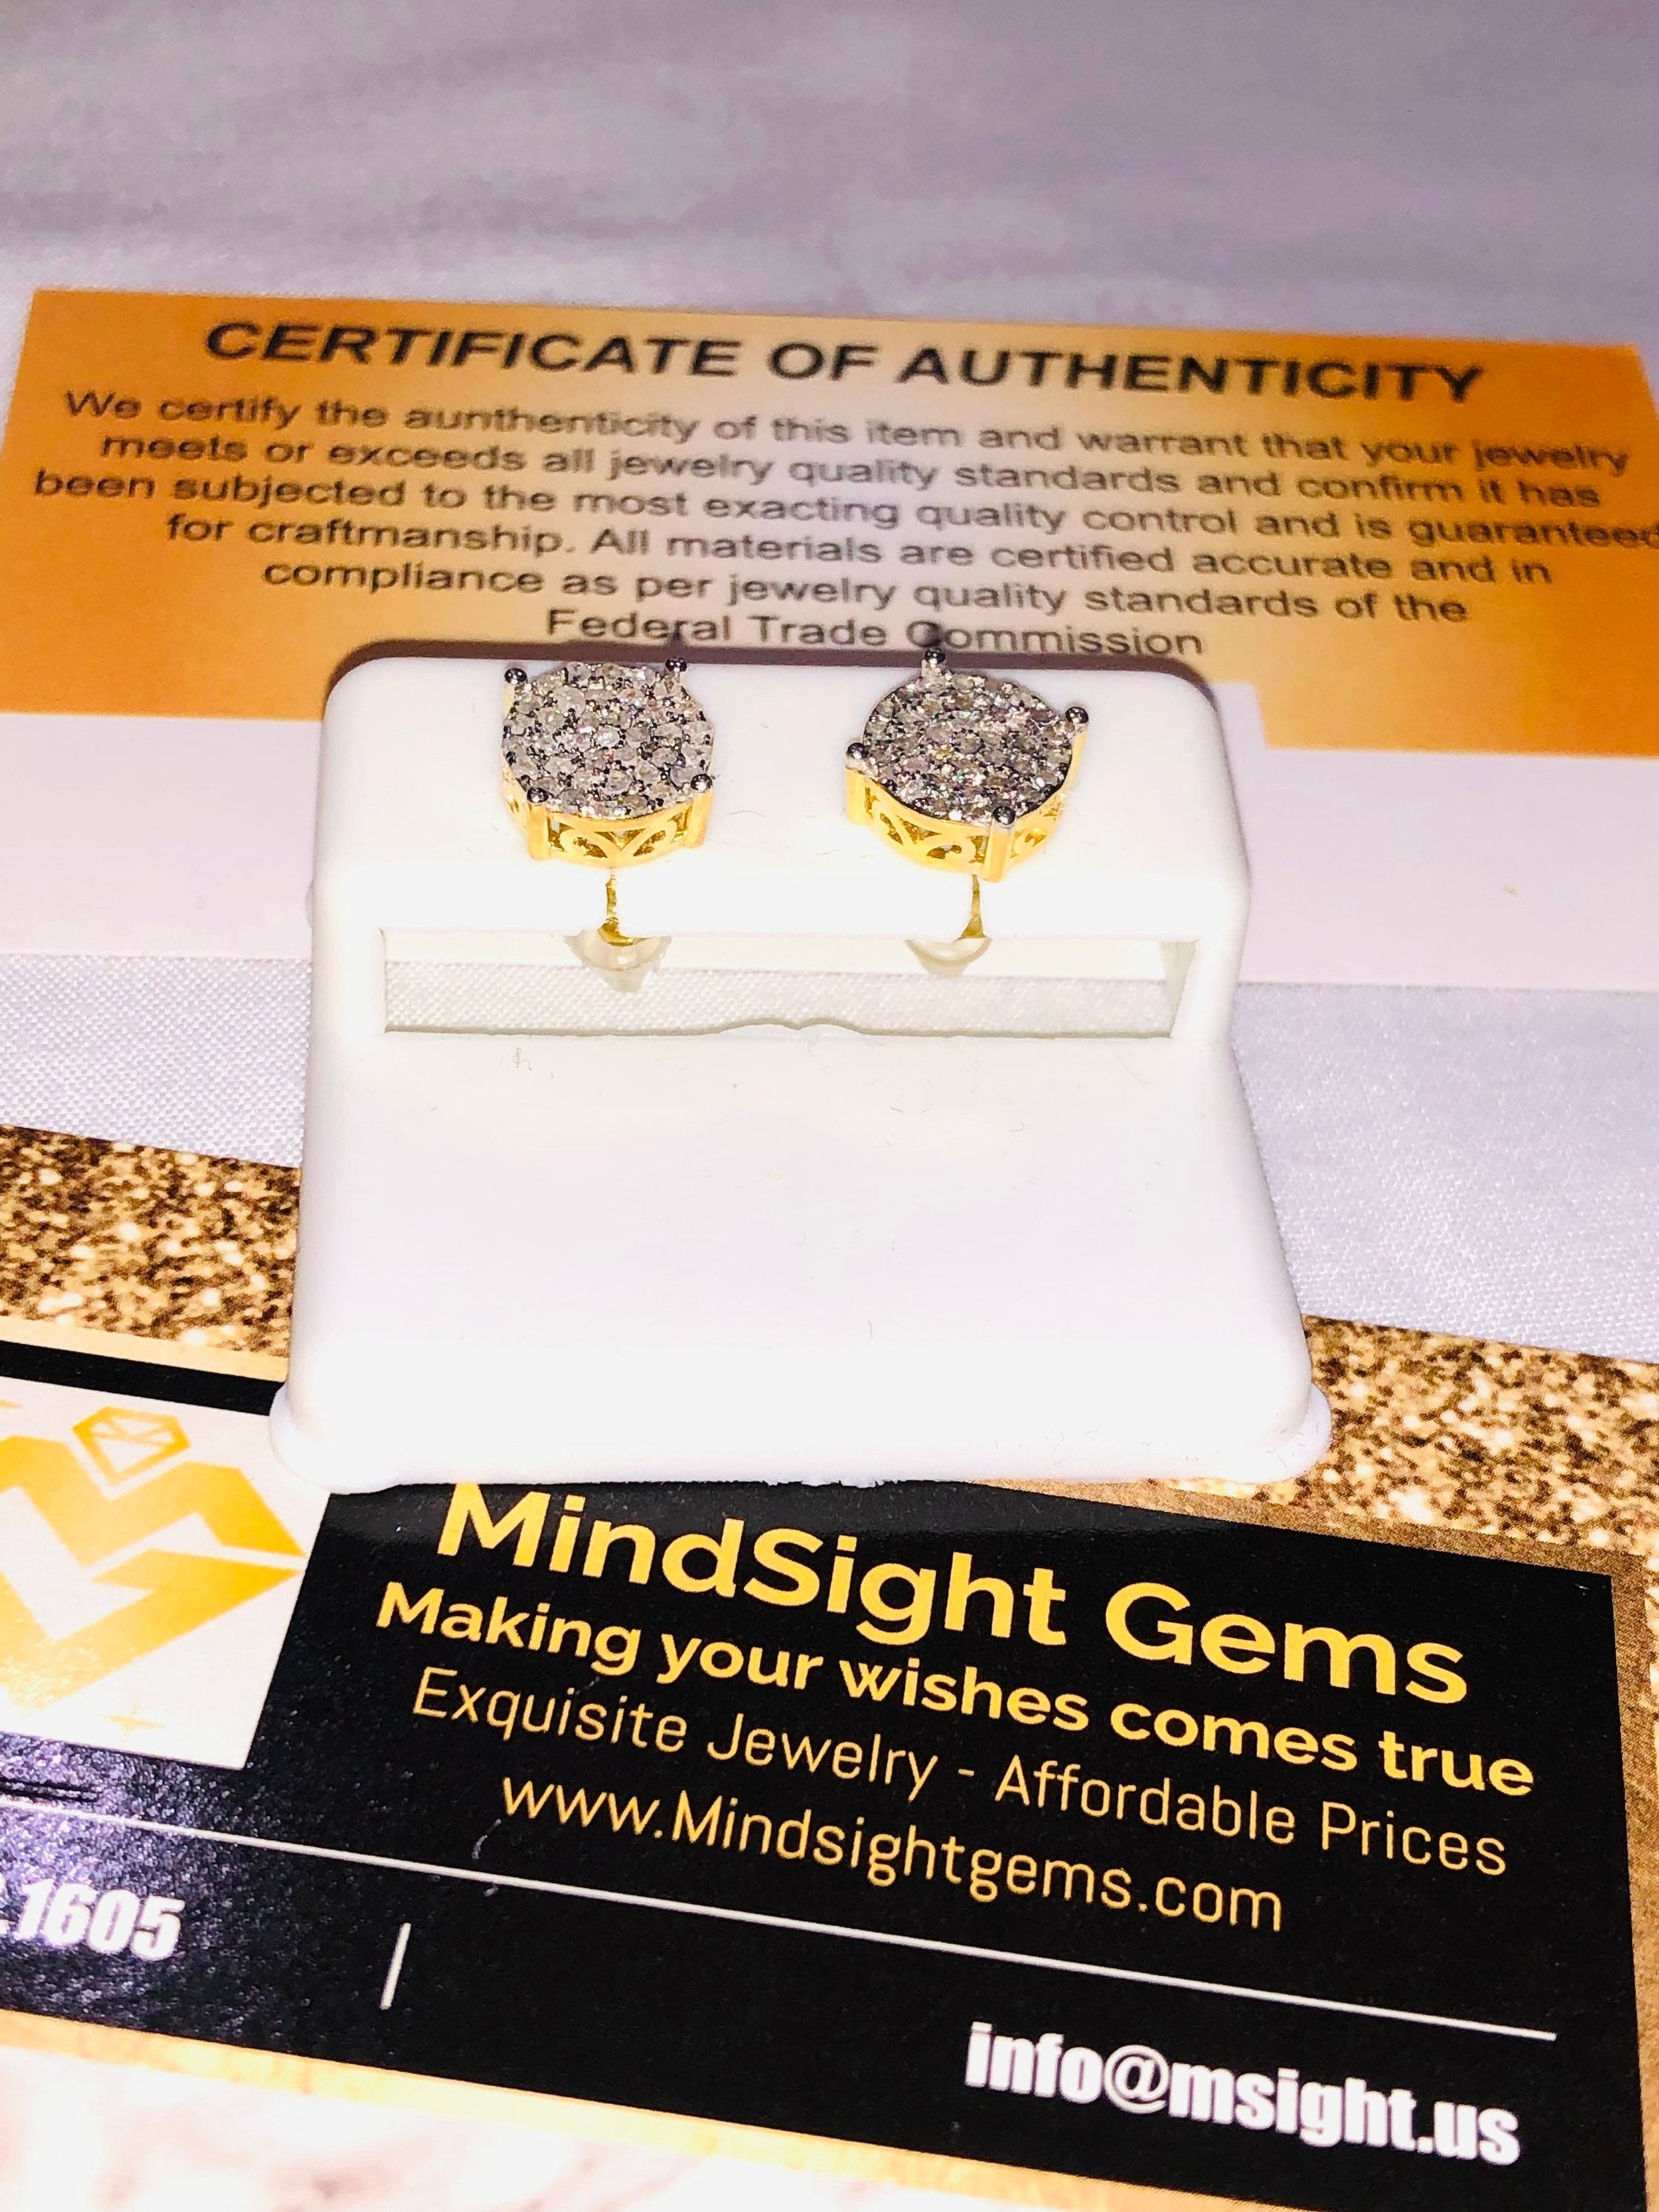 10k yellow gold vermeil real diamond earrings for men/women, not lab made, not CZ, 100% genuine natural diamonds, best Christmas